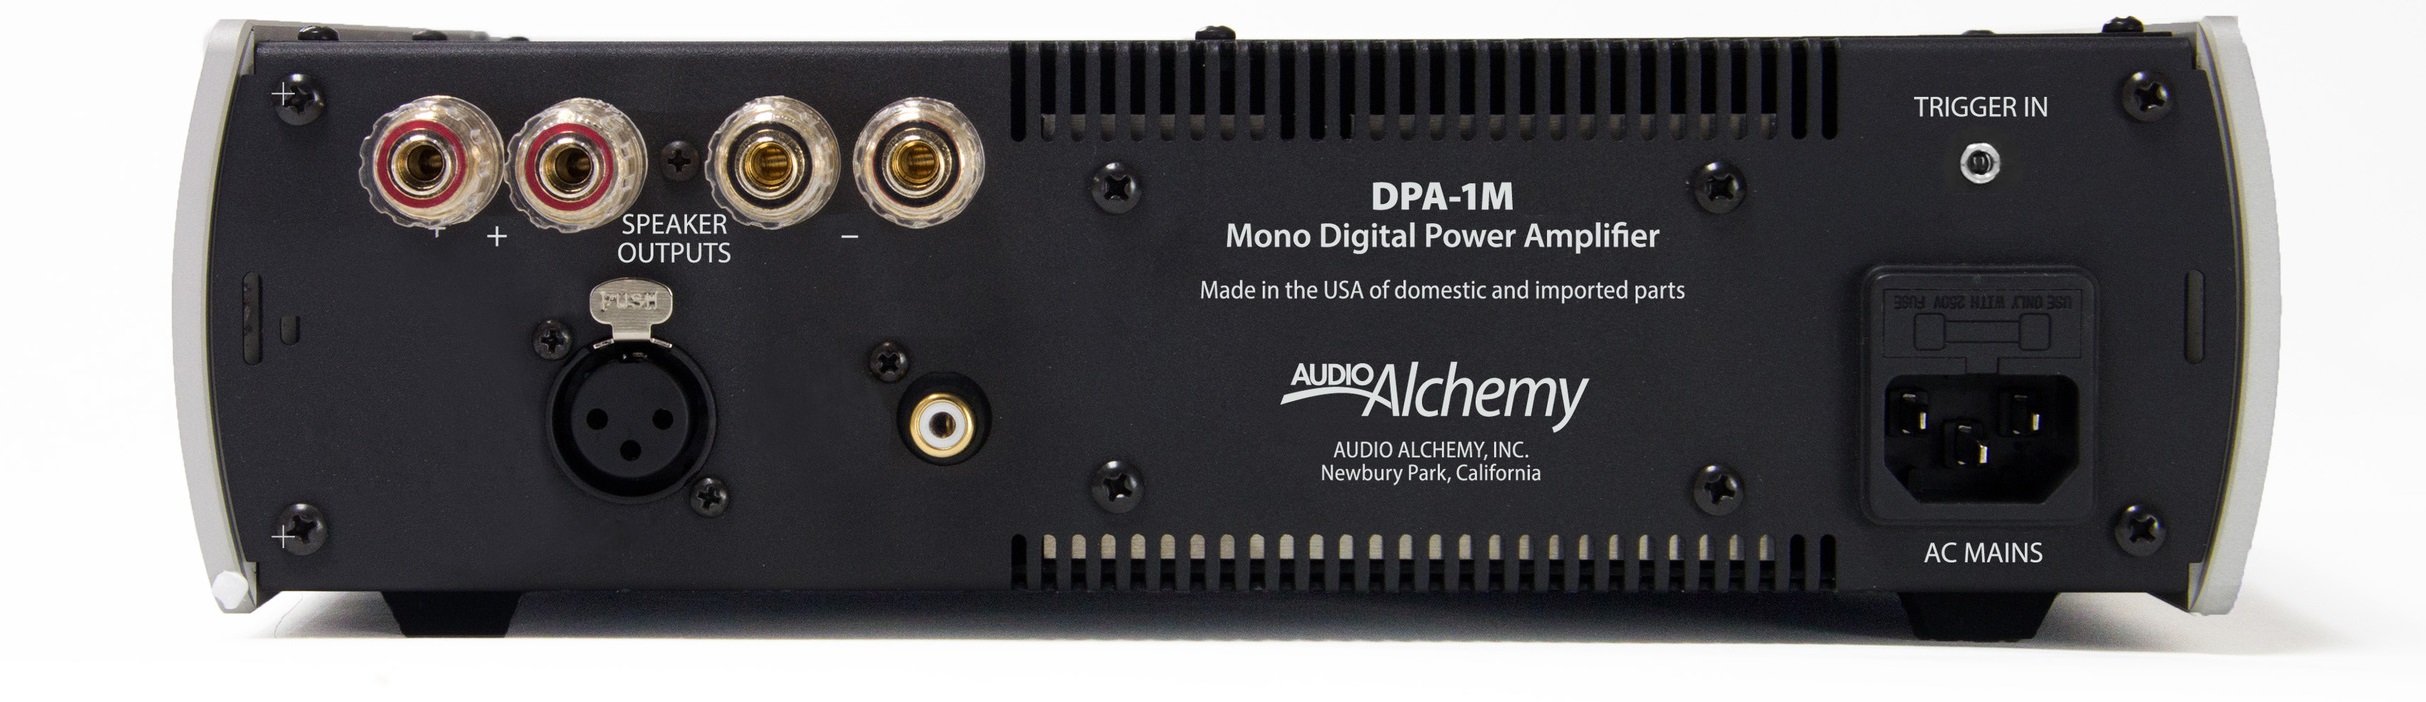 Colab Audio Alchemy DPA-1M